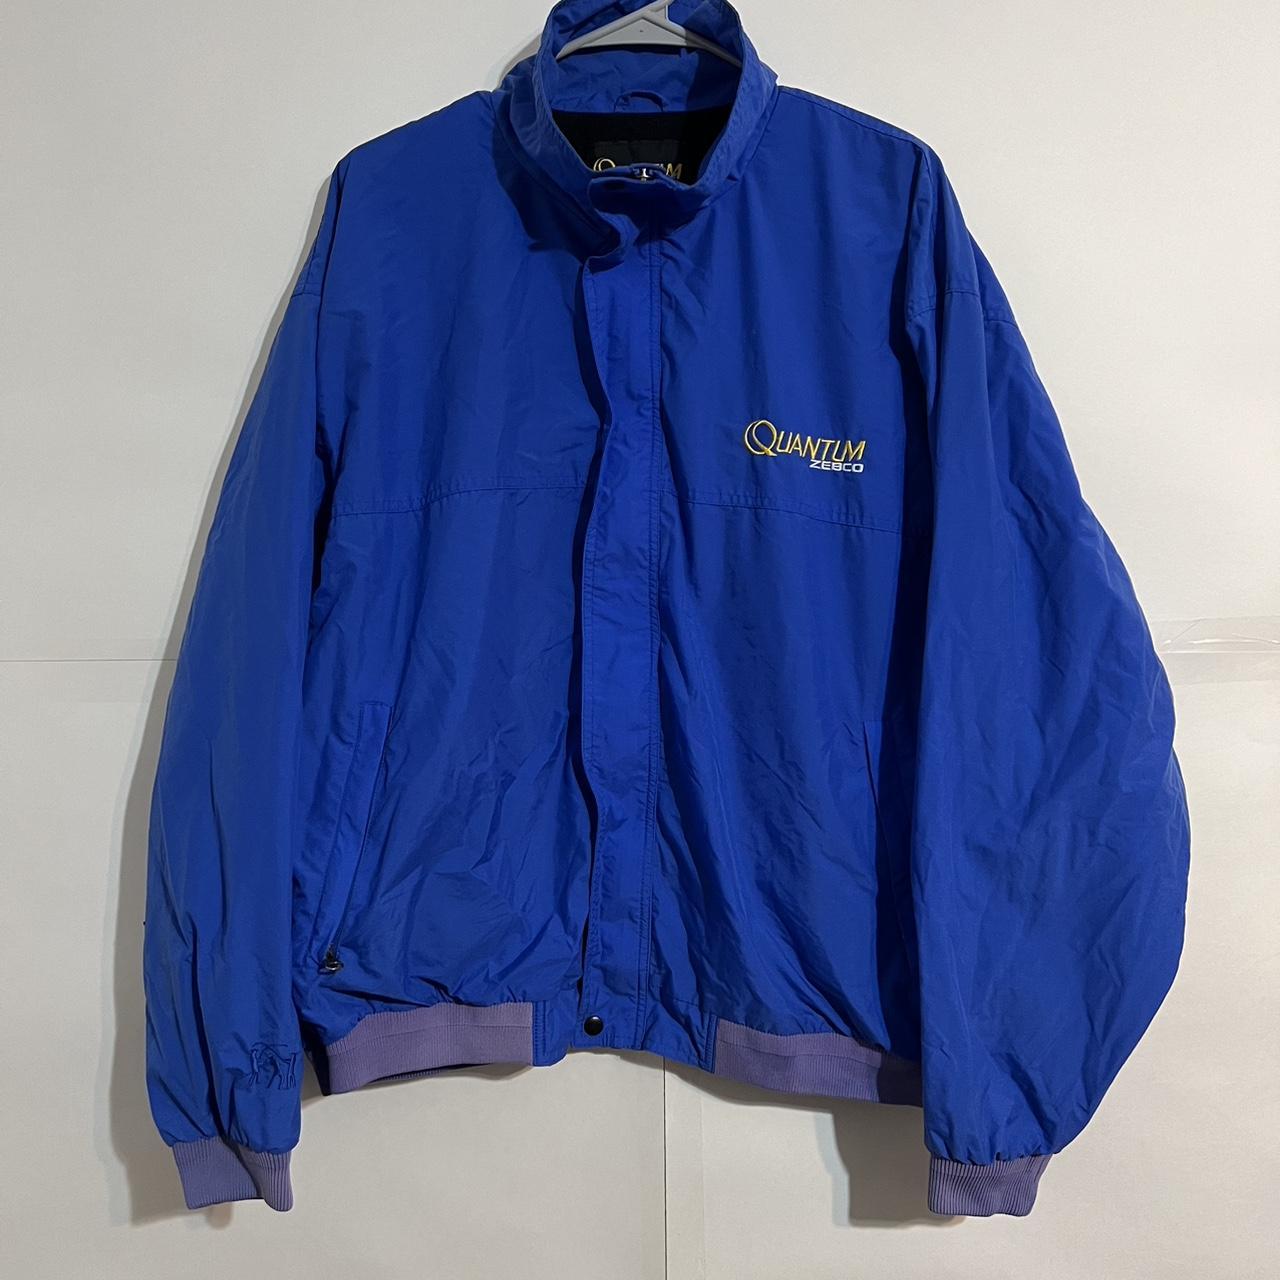 Vintage Zebco Quantum fishing brand jacket - Depop